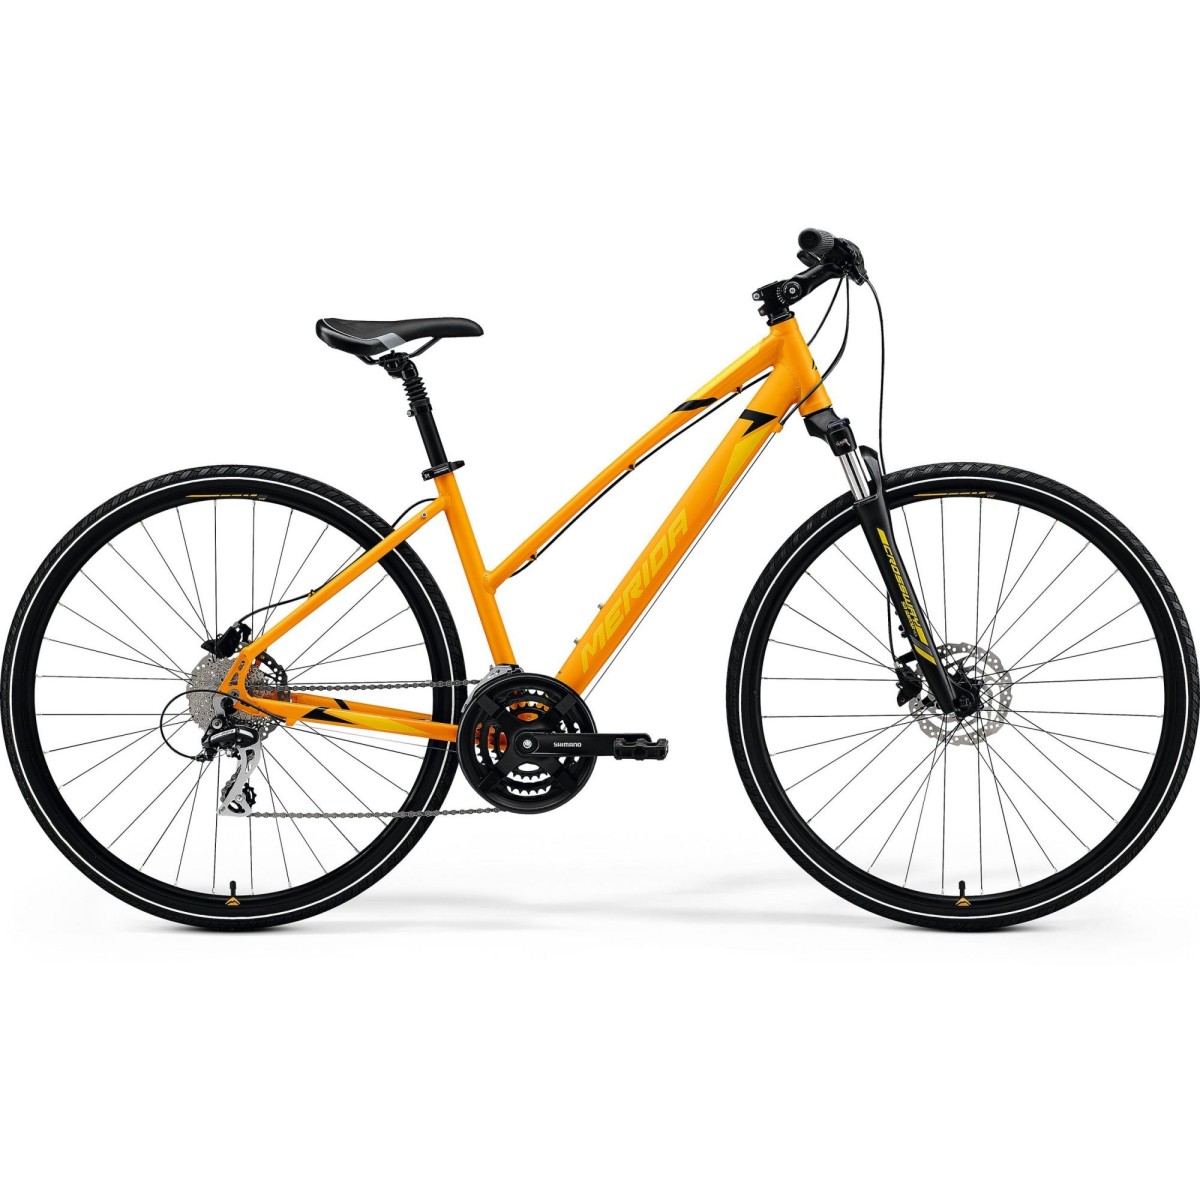 MERIDA CROSSWAY 20 LADY velosipēds - oranžs